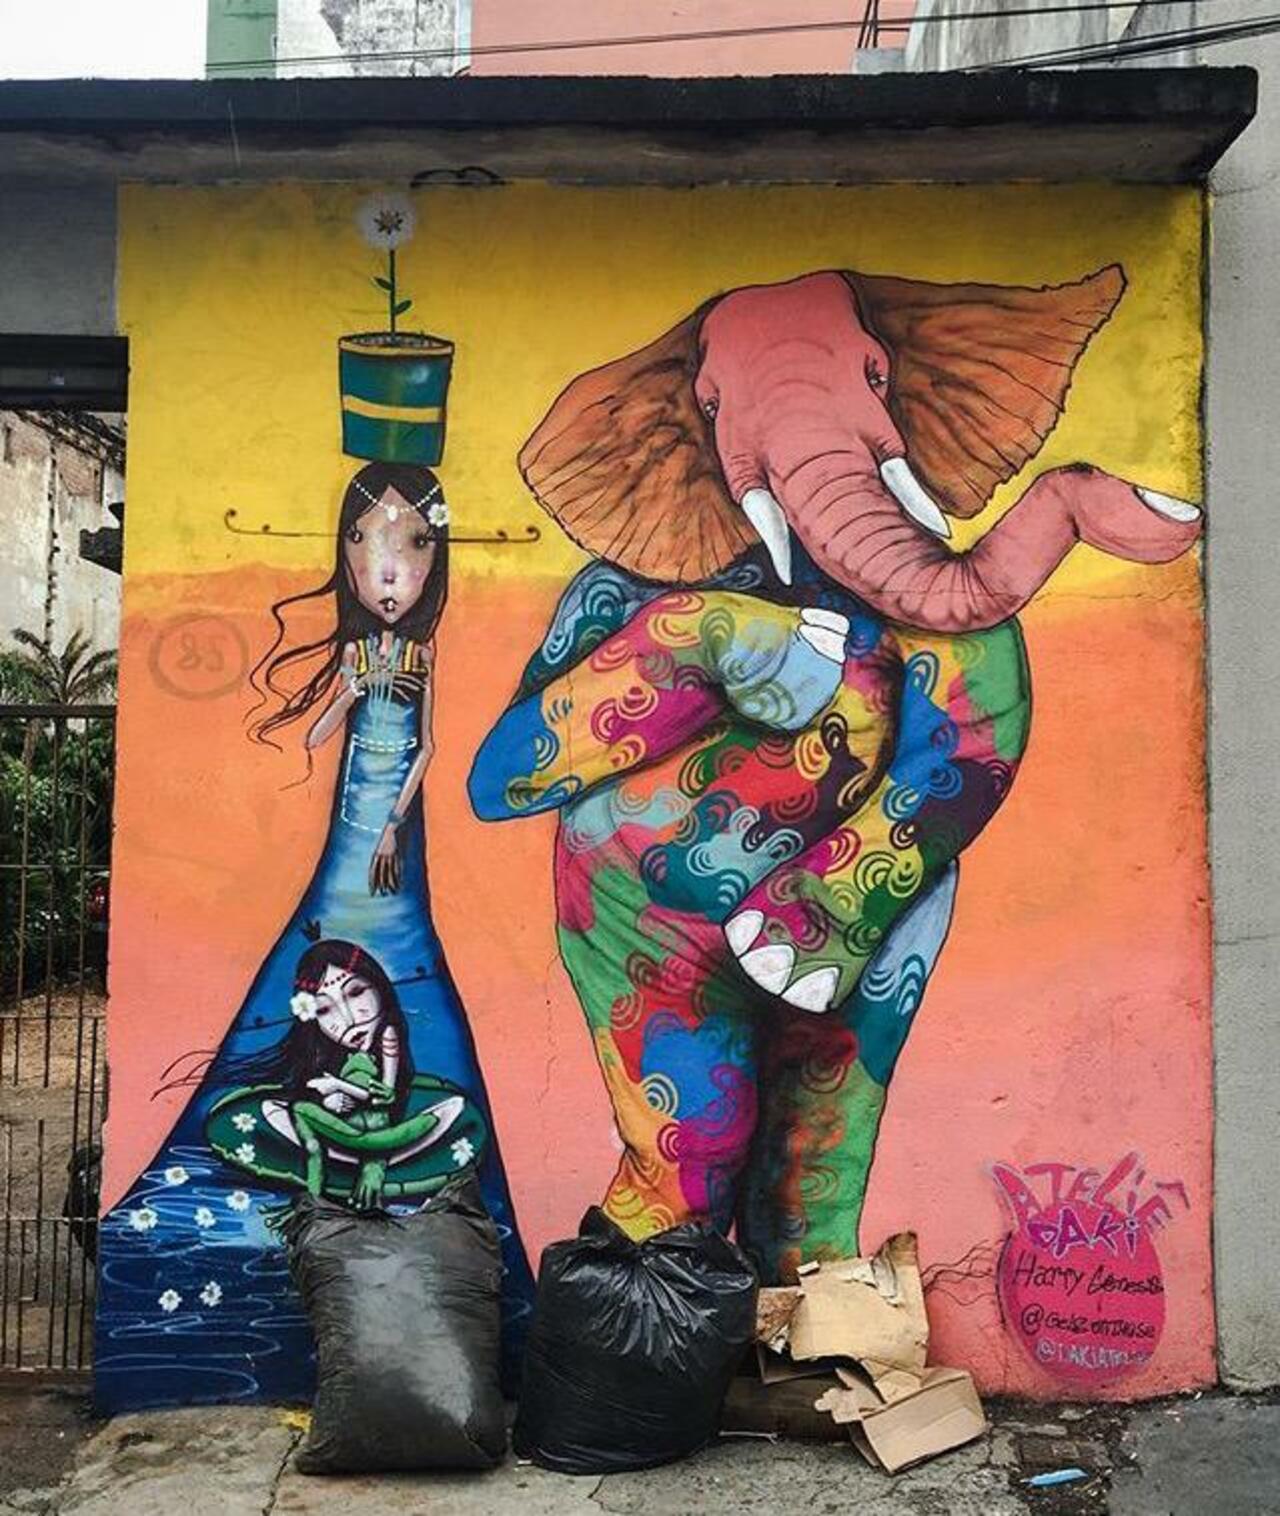 Street Art by Harry Geneis & Gelson in São Paulo #art #mural #graffiti #streetart http://t.co/SlLbhuMZfD … … …… … http://twitter.com/charlesjackso14/status/648021495617331200